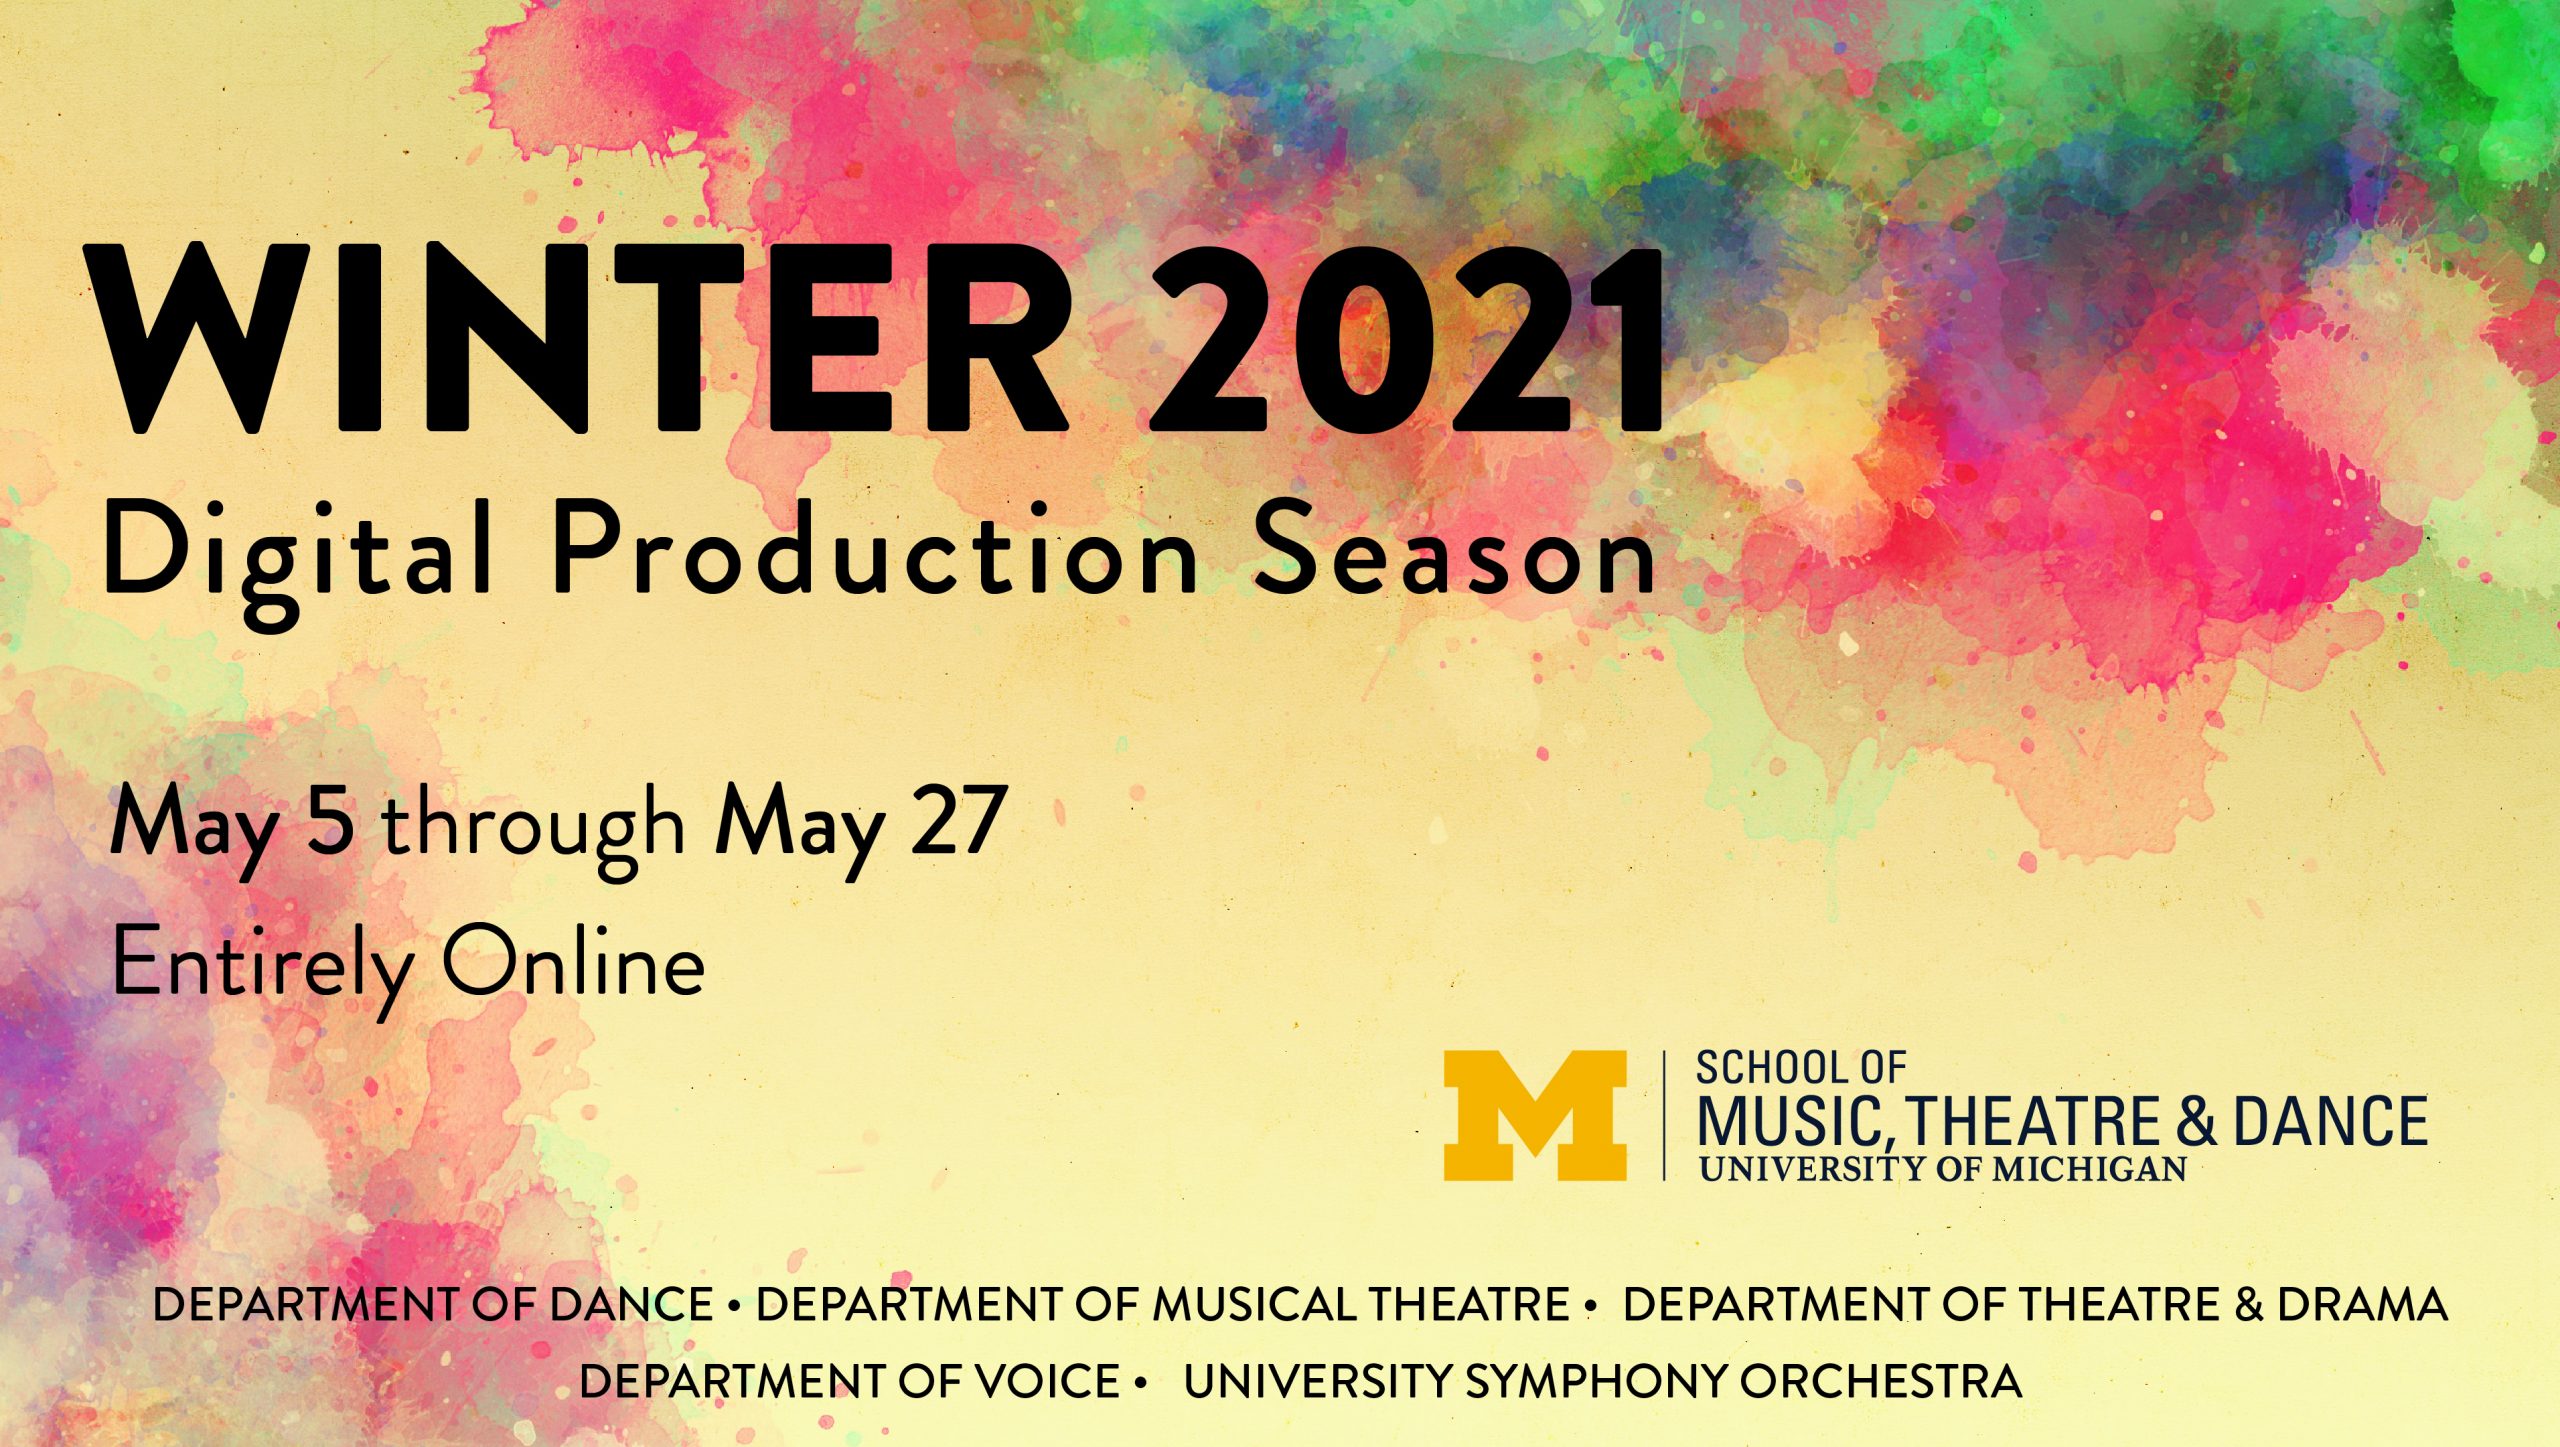 Winter 2021 Digital Production Season, May 5 through May 27, entirely online